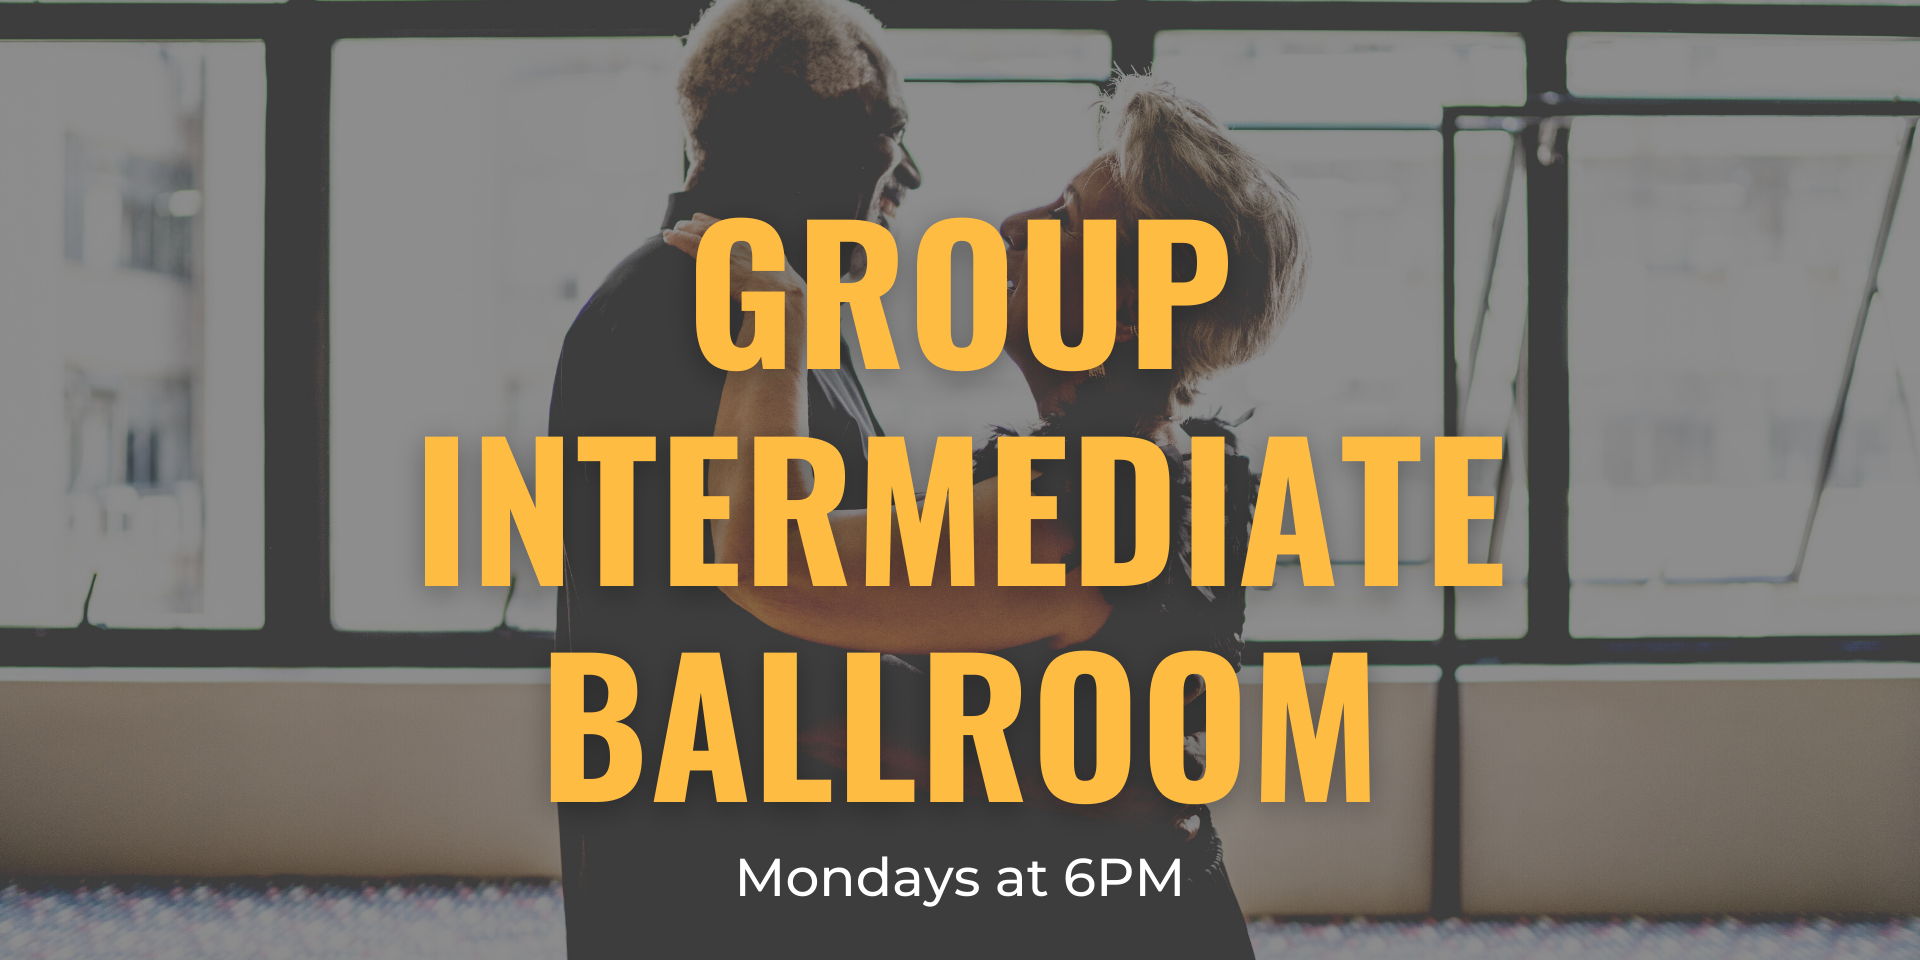 Group Intermediate Ballroom Class promotional image